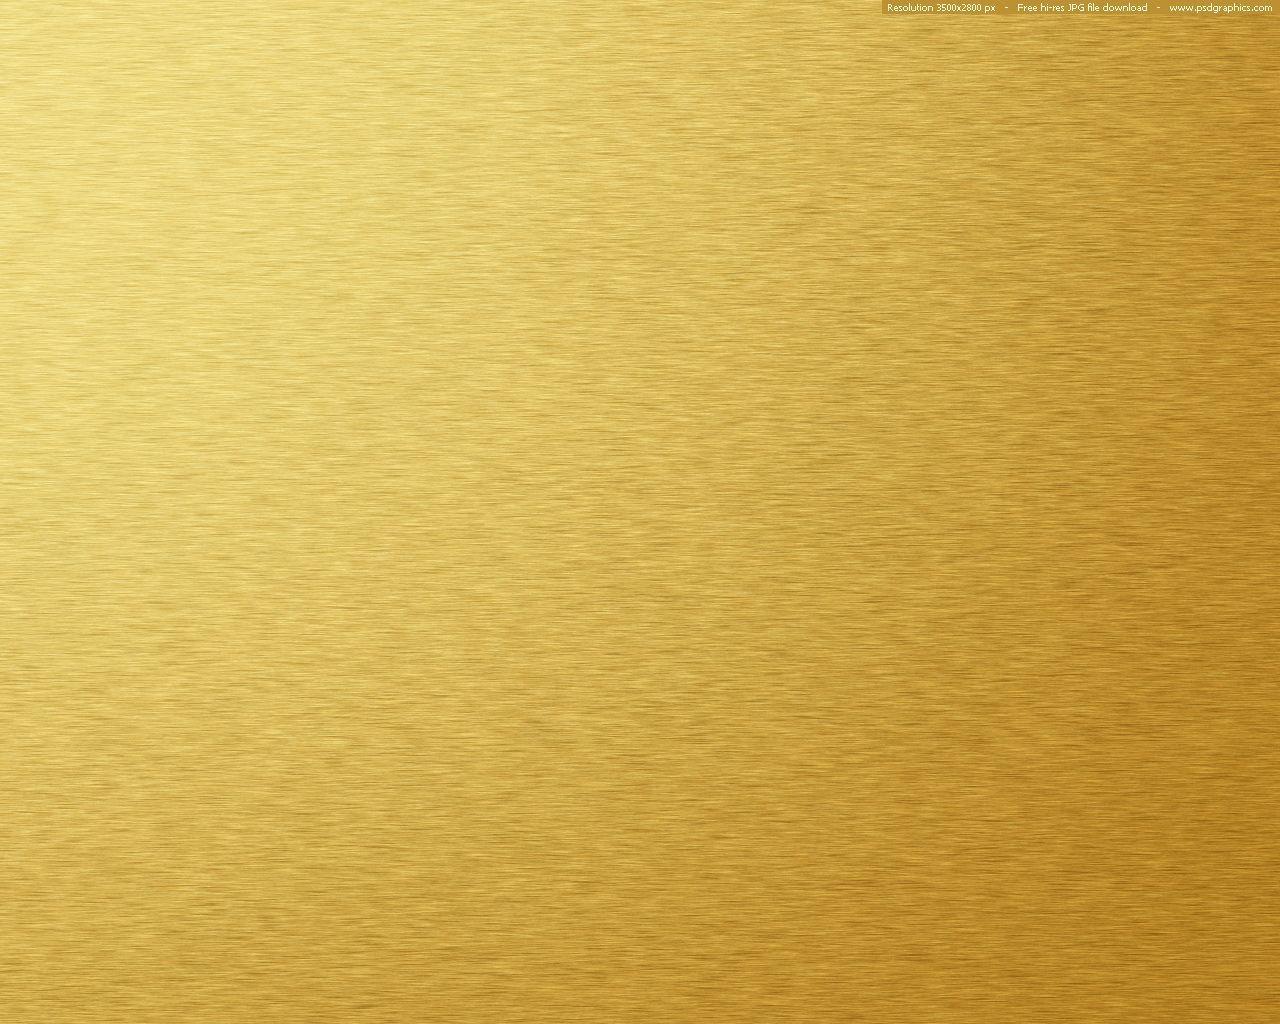 Brushed gold metal texture